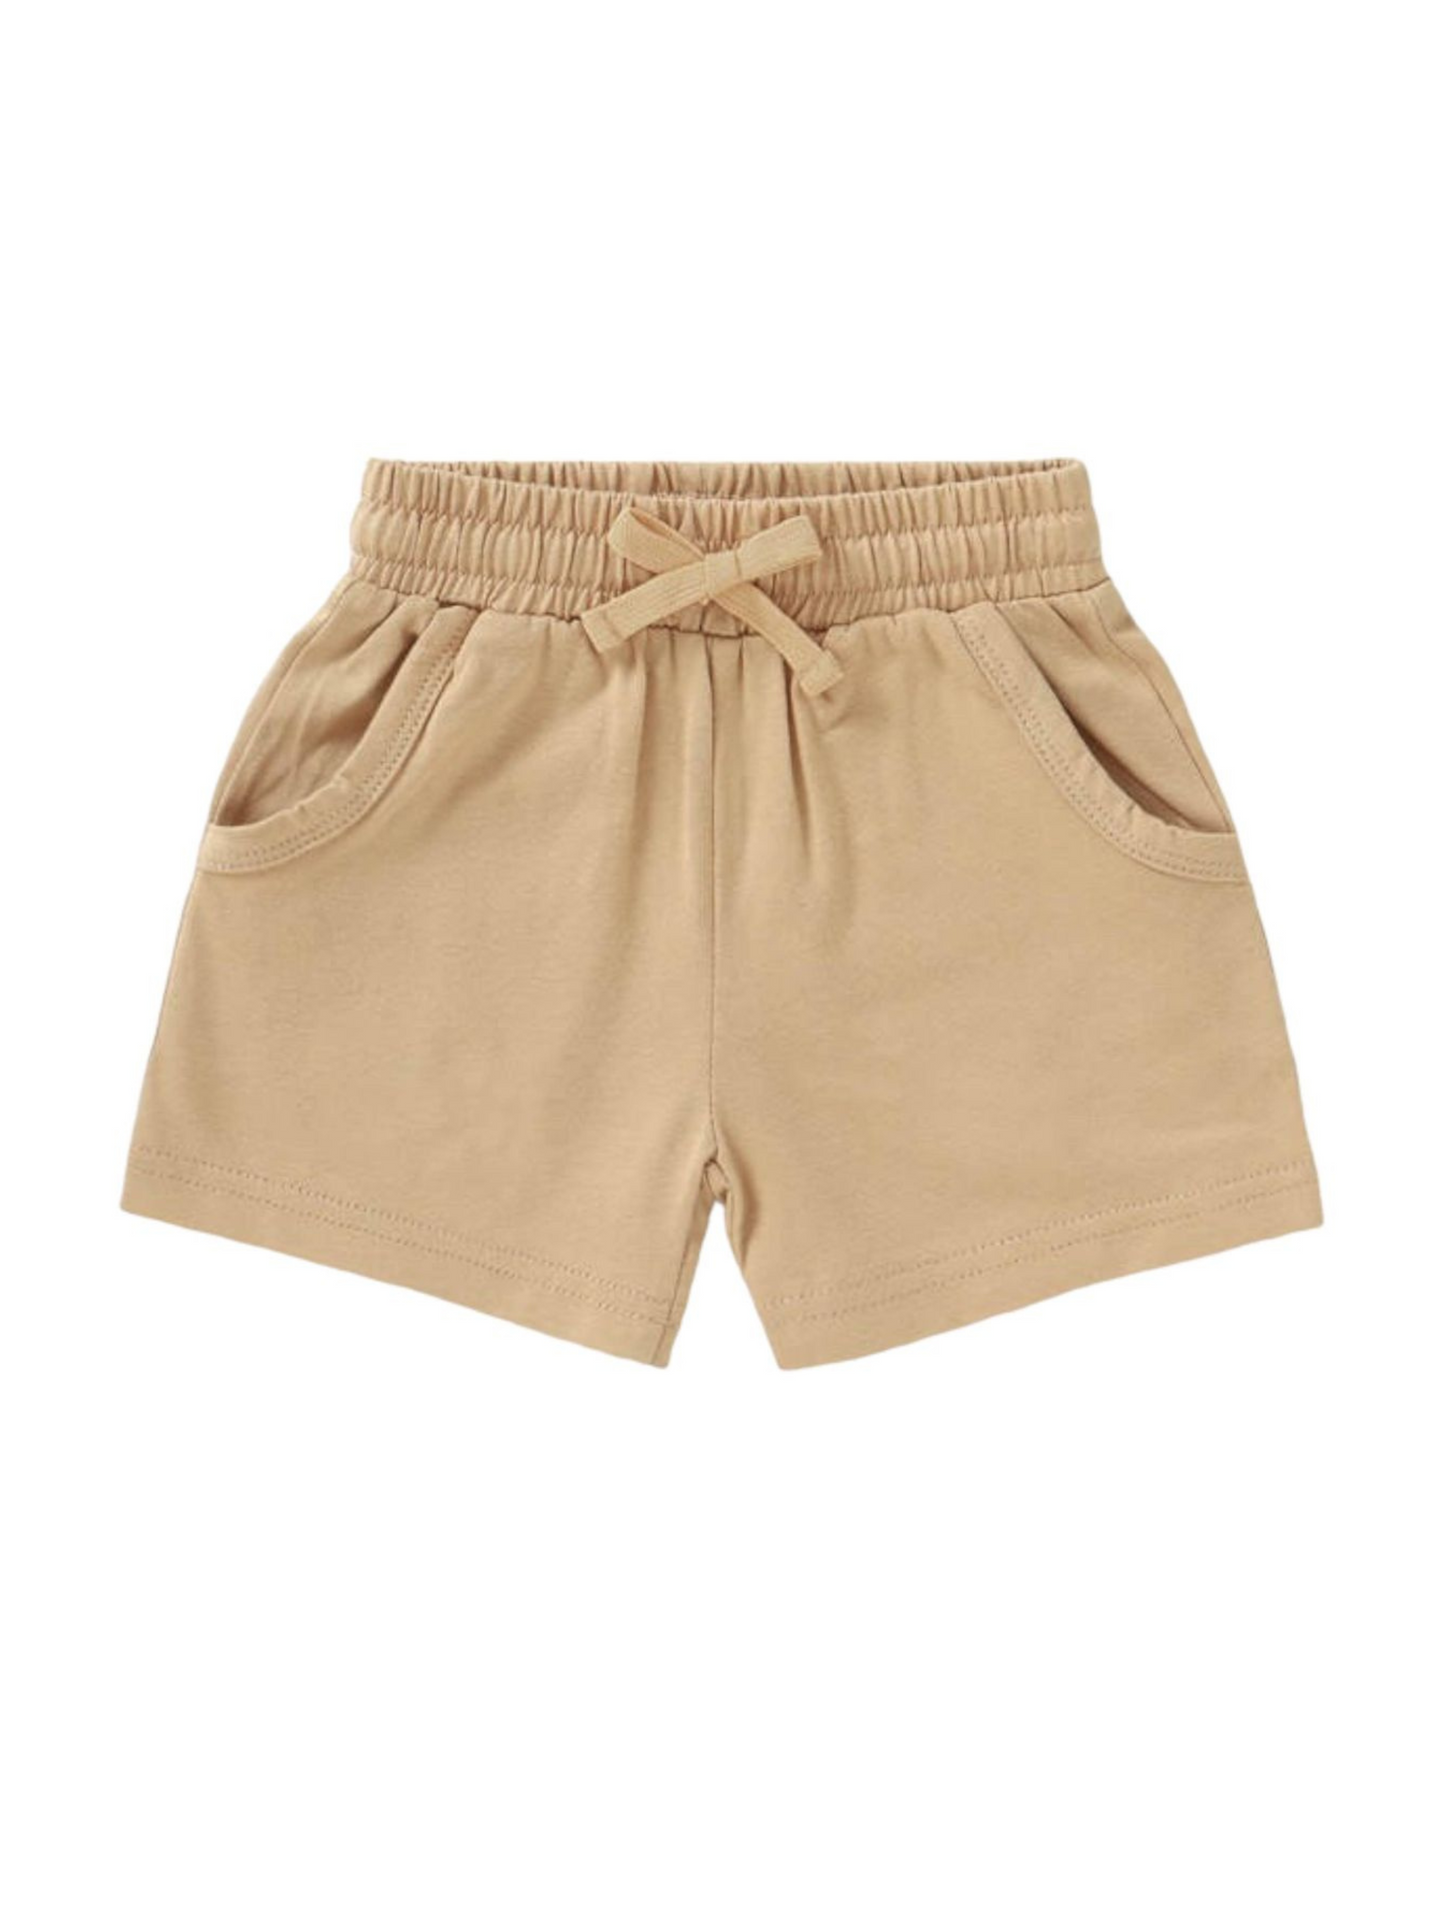 kids cotton sweat shorts in tan 